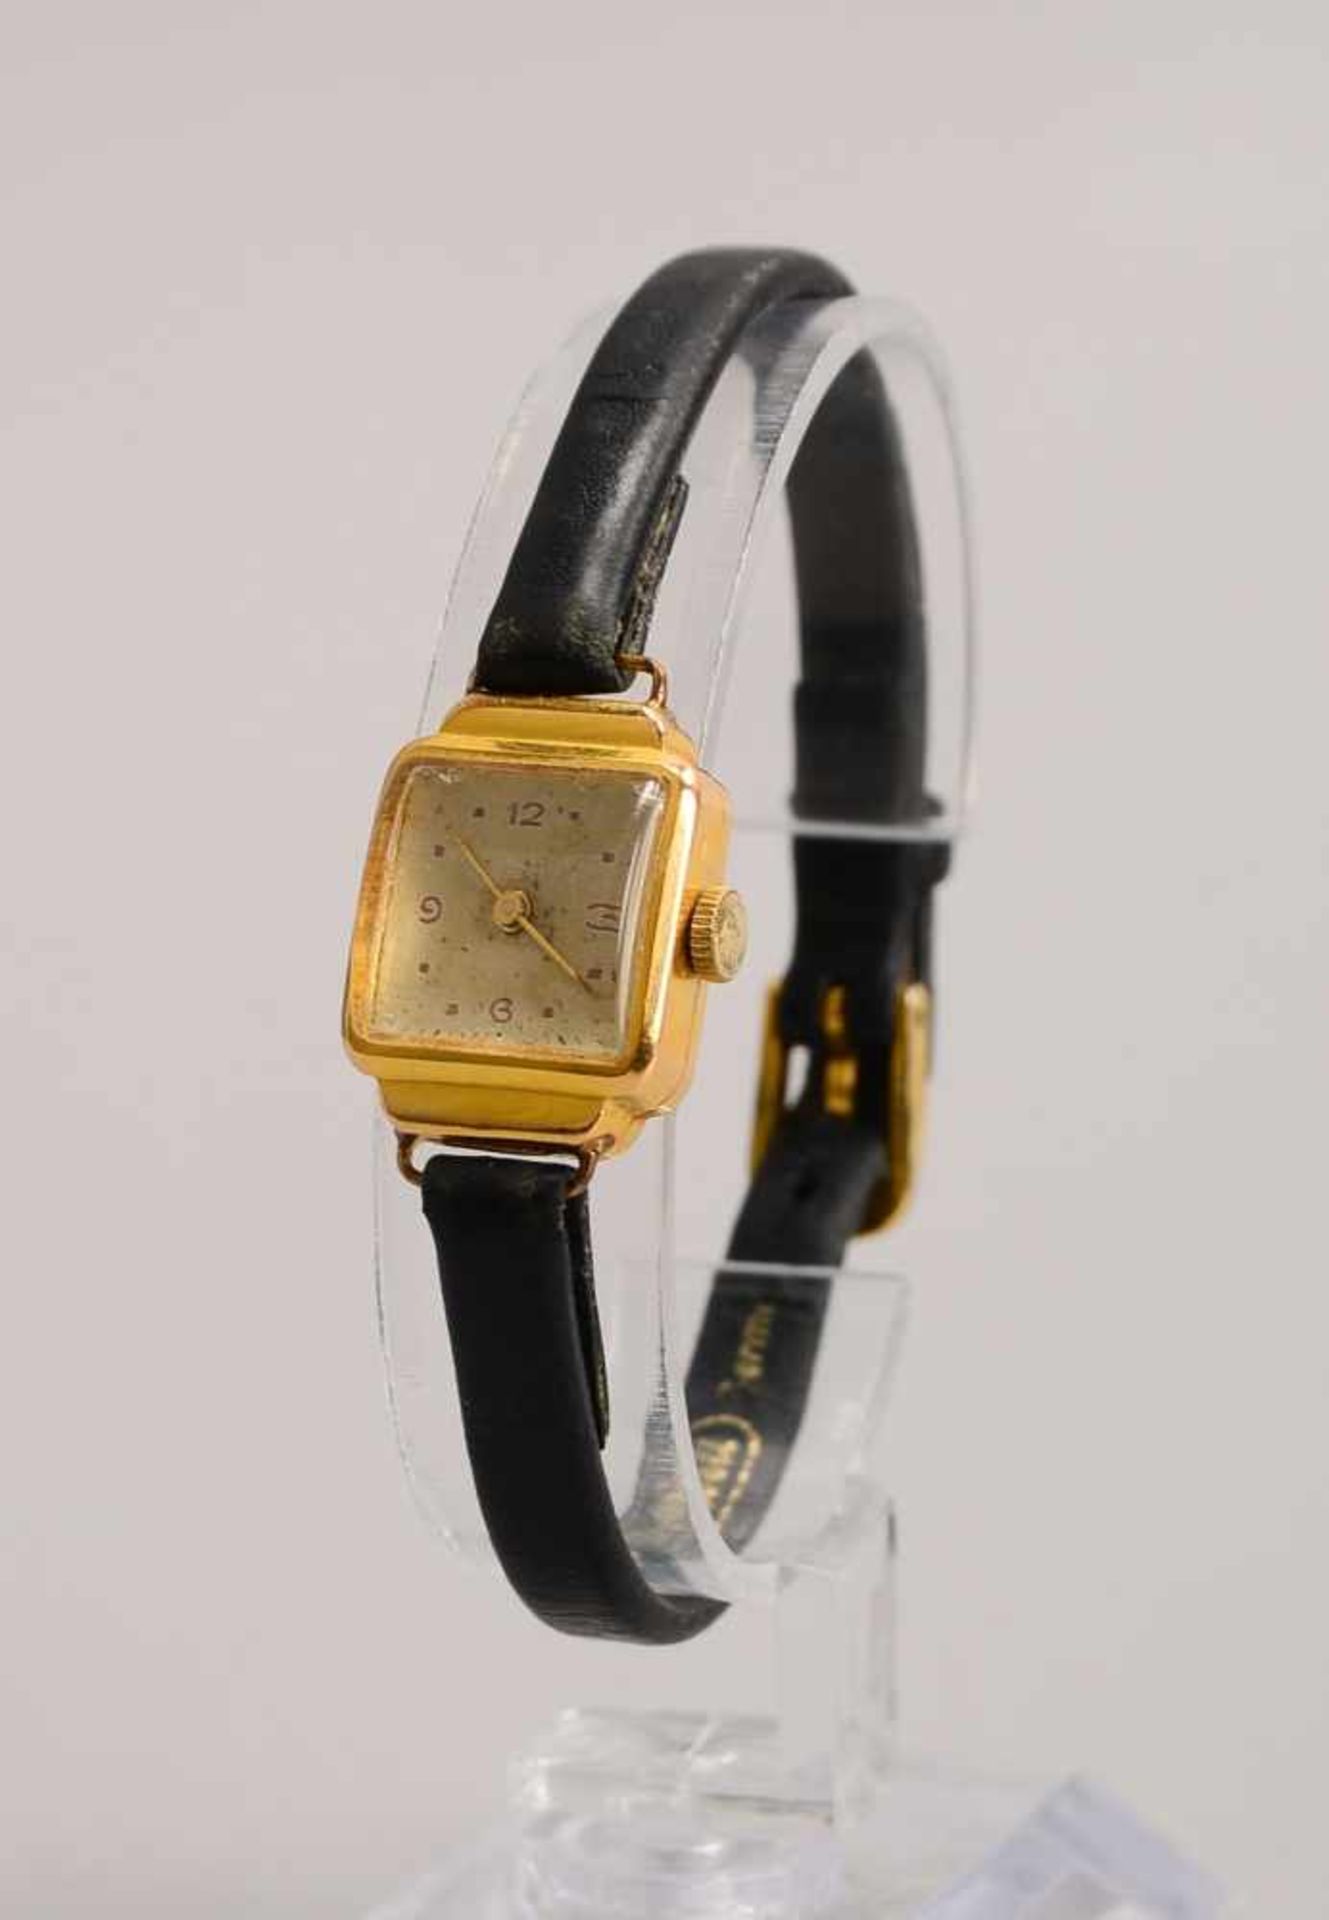 Damen-Armbanduhr (Art déco), 750 GG-Gehäuse, mit Lederarmband, Uhr läuft an; Maße Gehäuse 3,2 cm x - Bild 2 aus 2